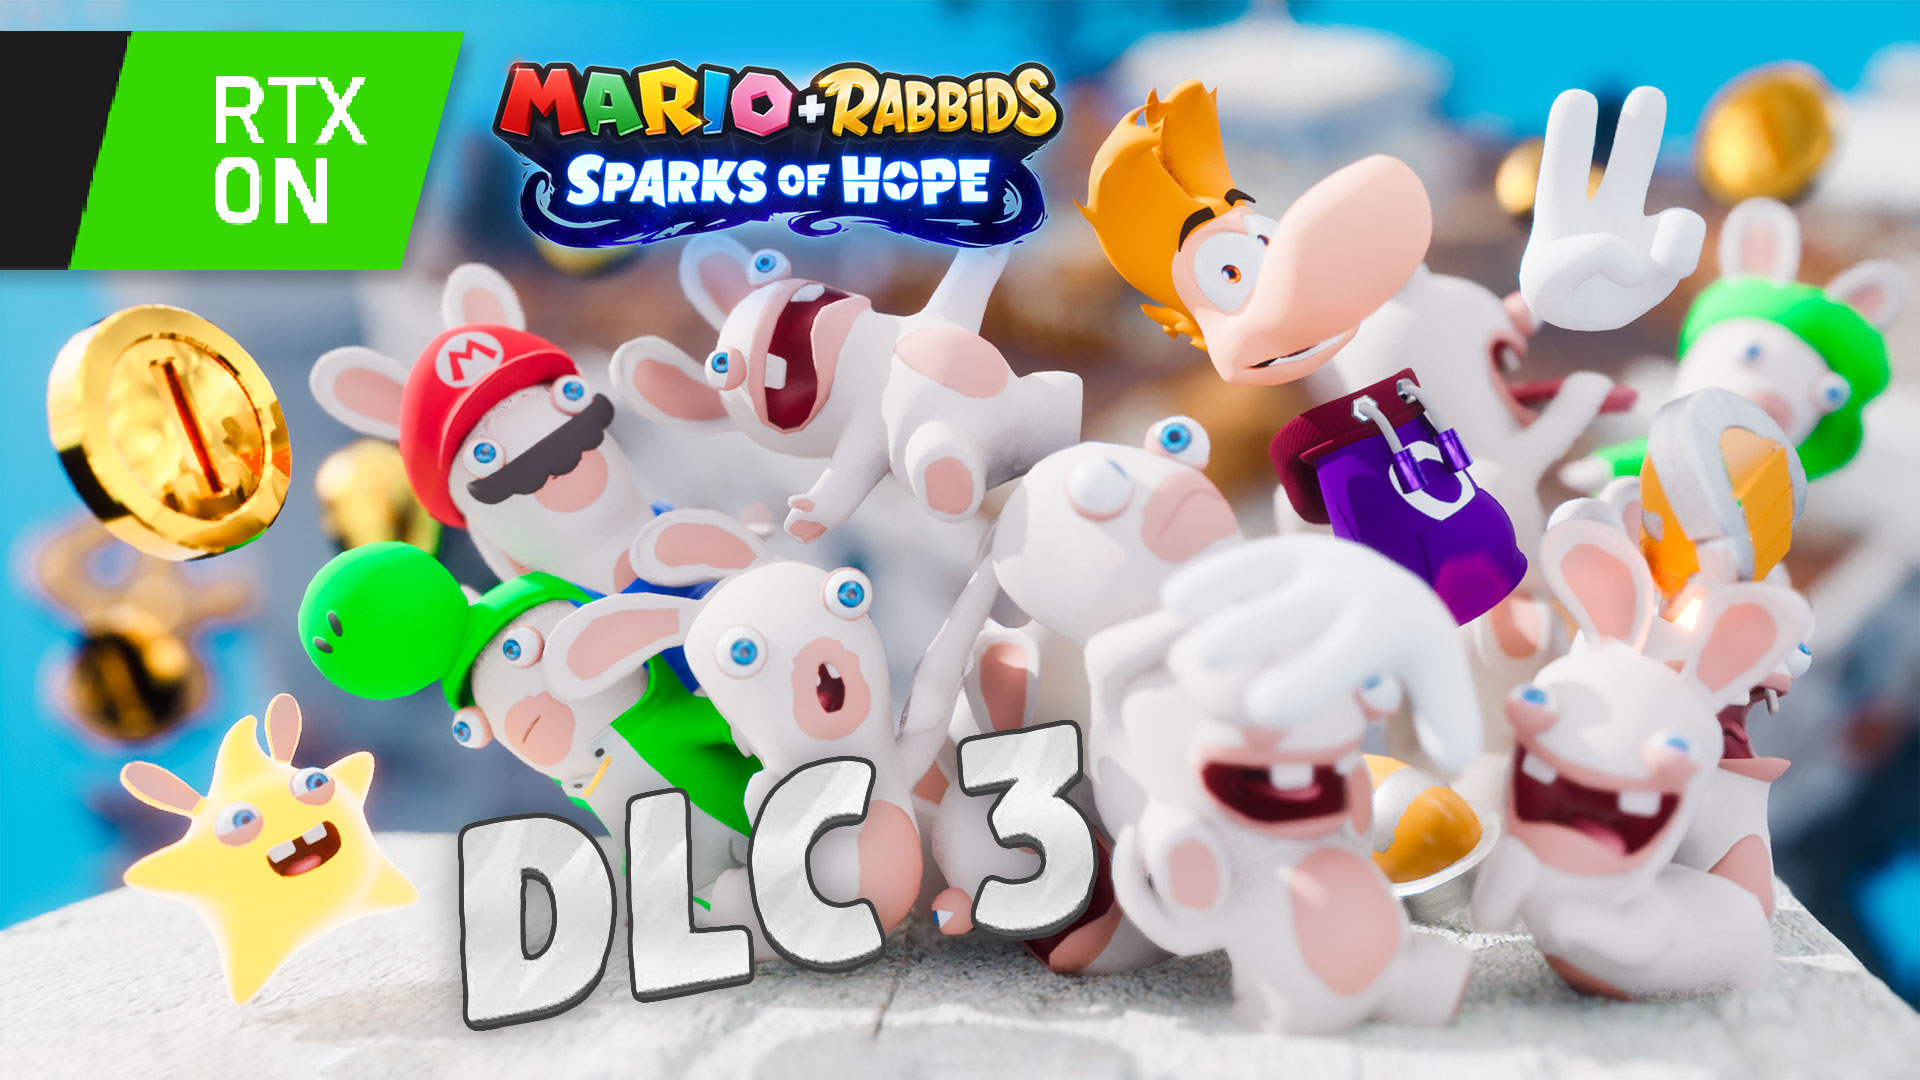 Rayman DLC - Mario + Rabbids Sparks of Hope